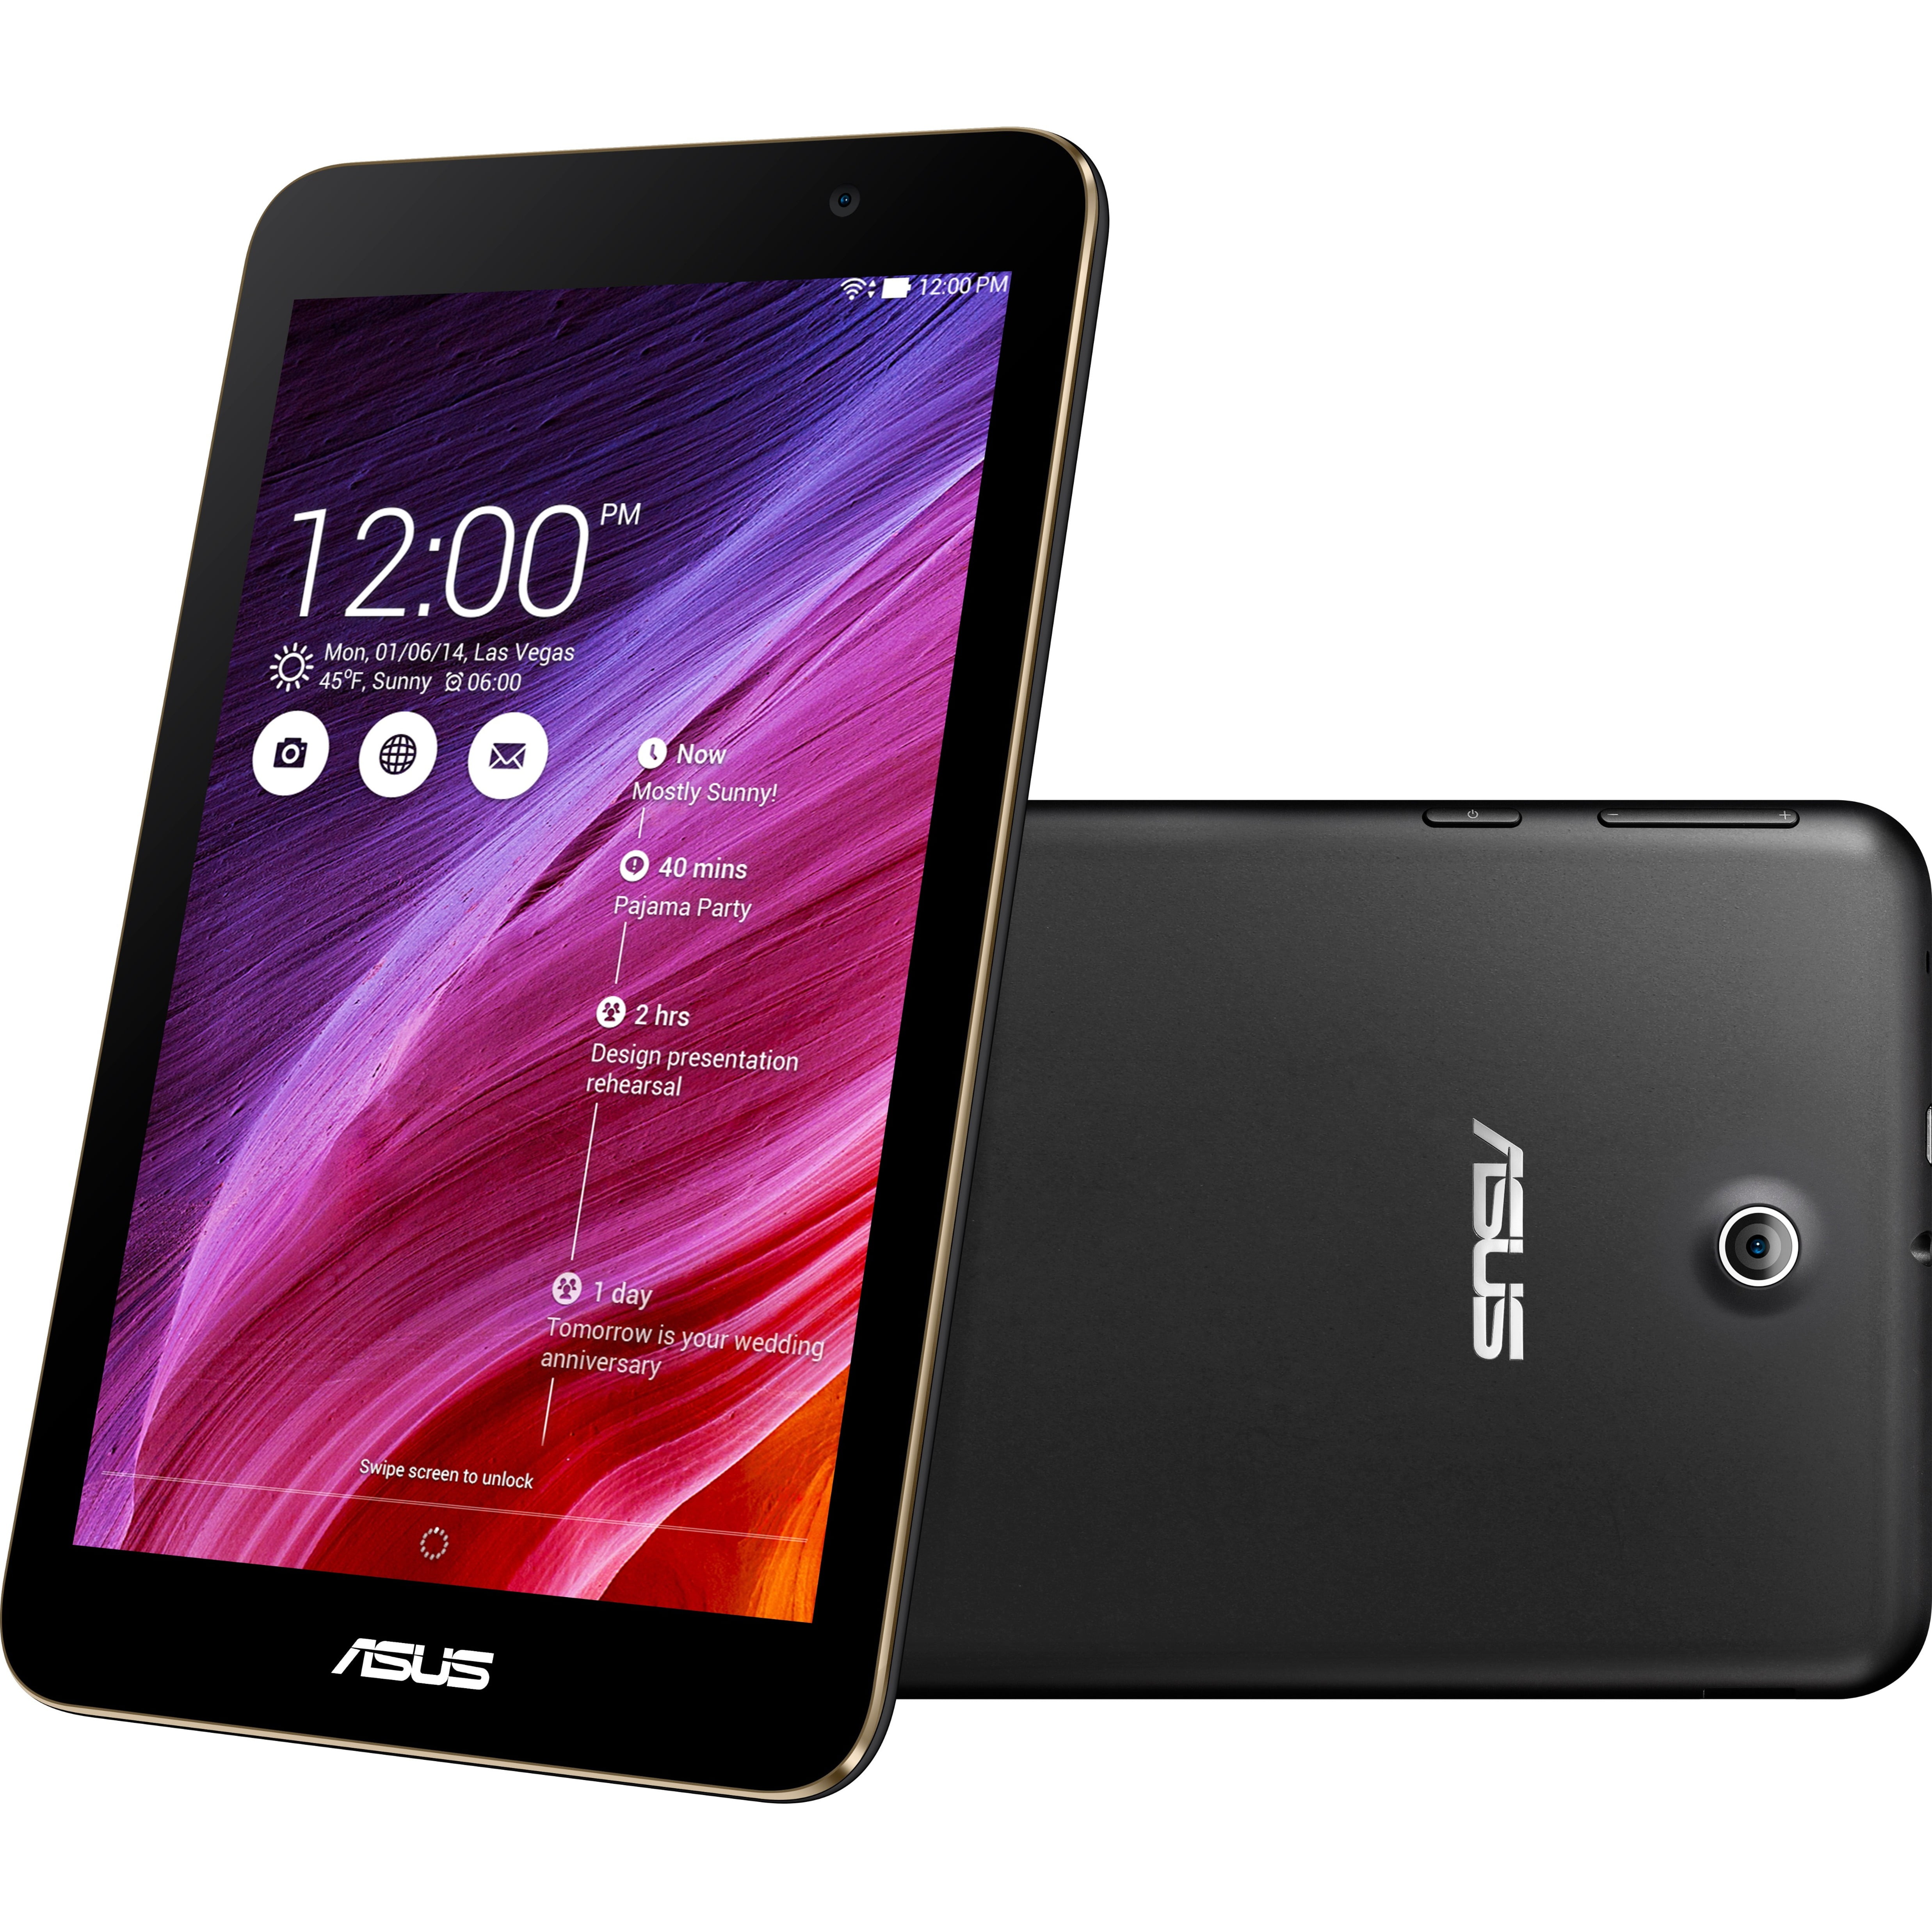 ASUS MeMO Pad 7 ME176CX - Tablet - Android 4.4 (KitKat) - 16 GB eMMC - 7